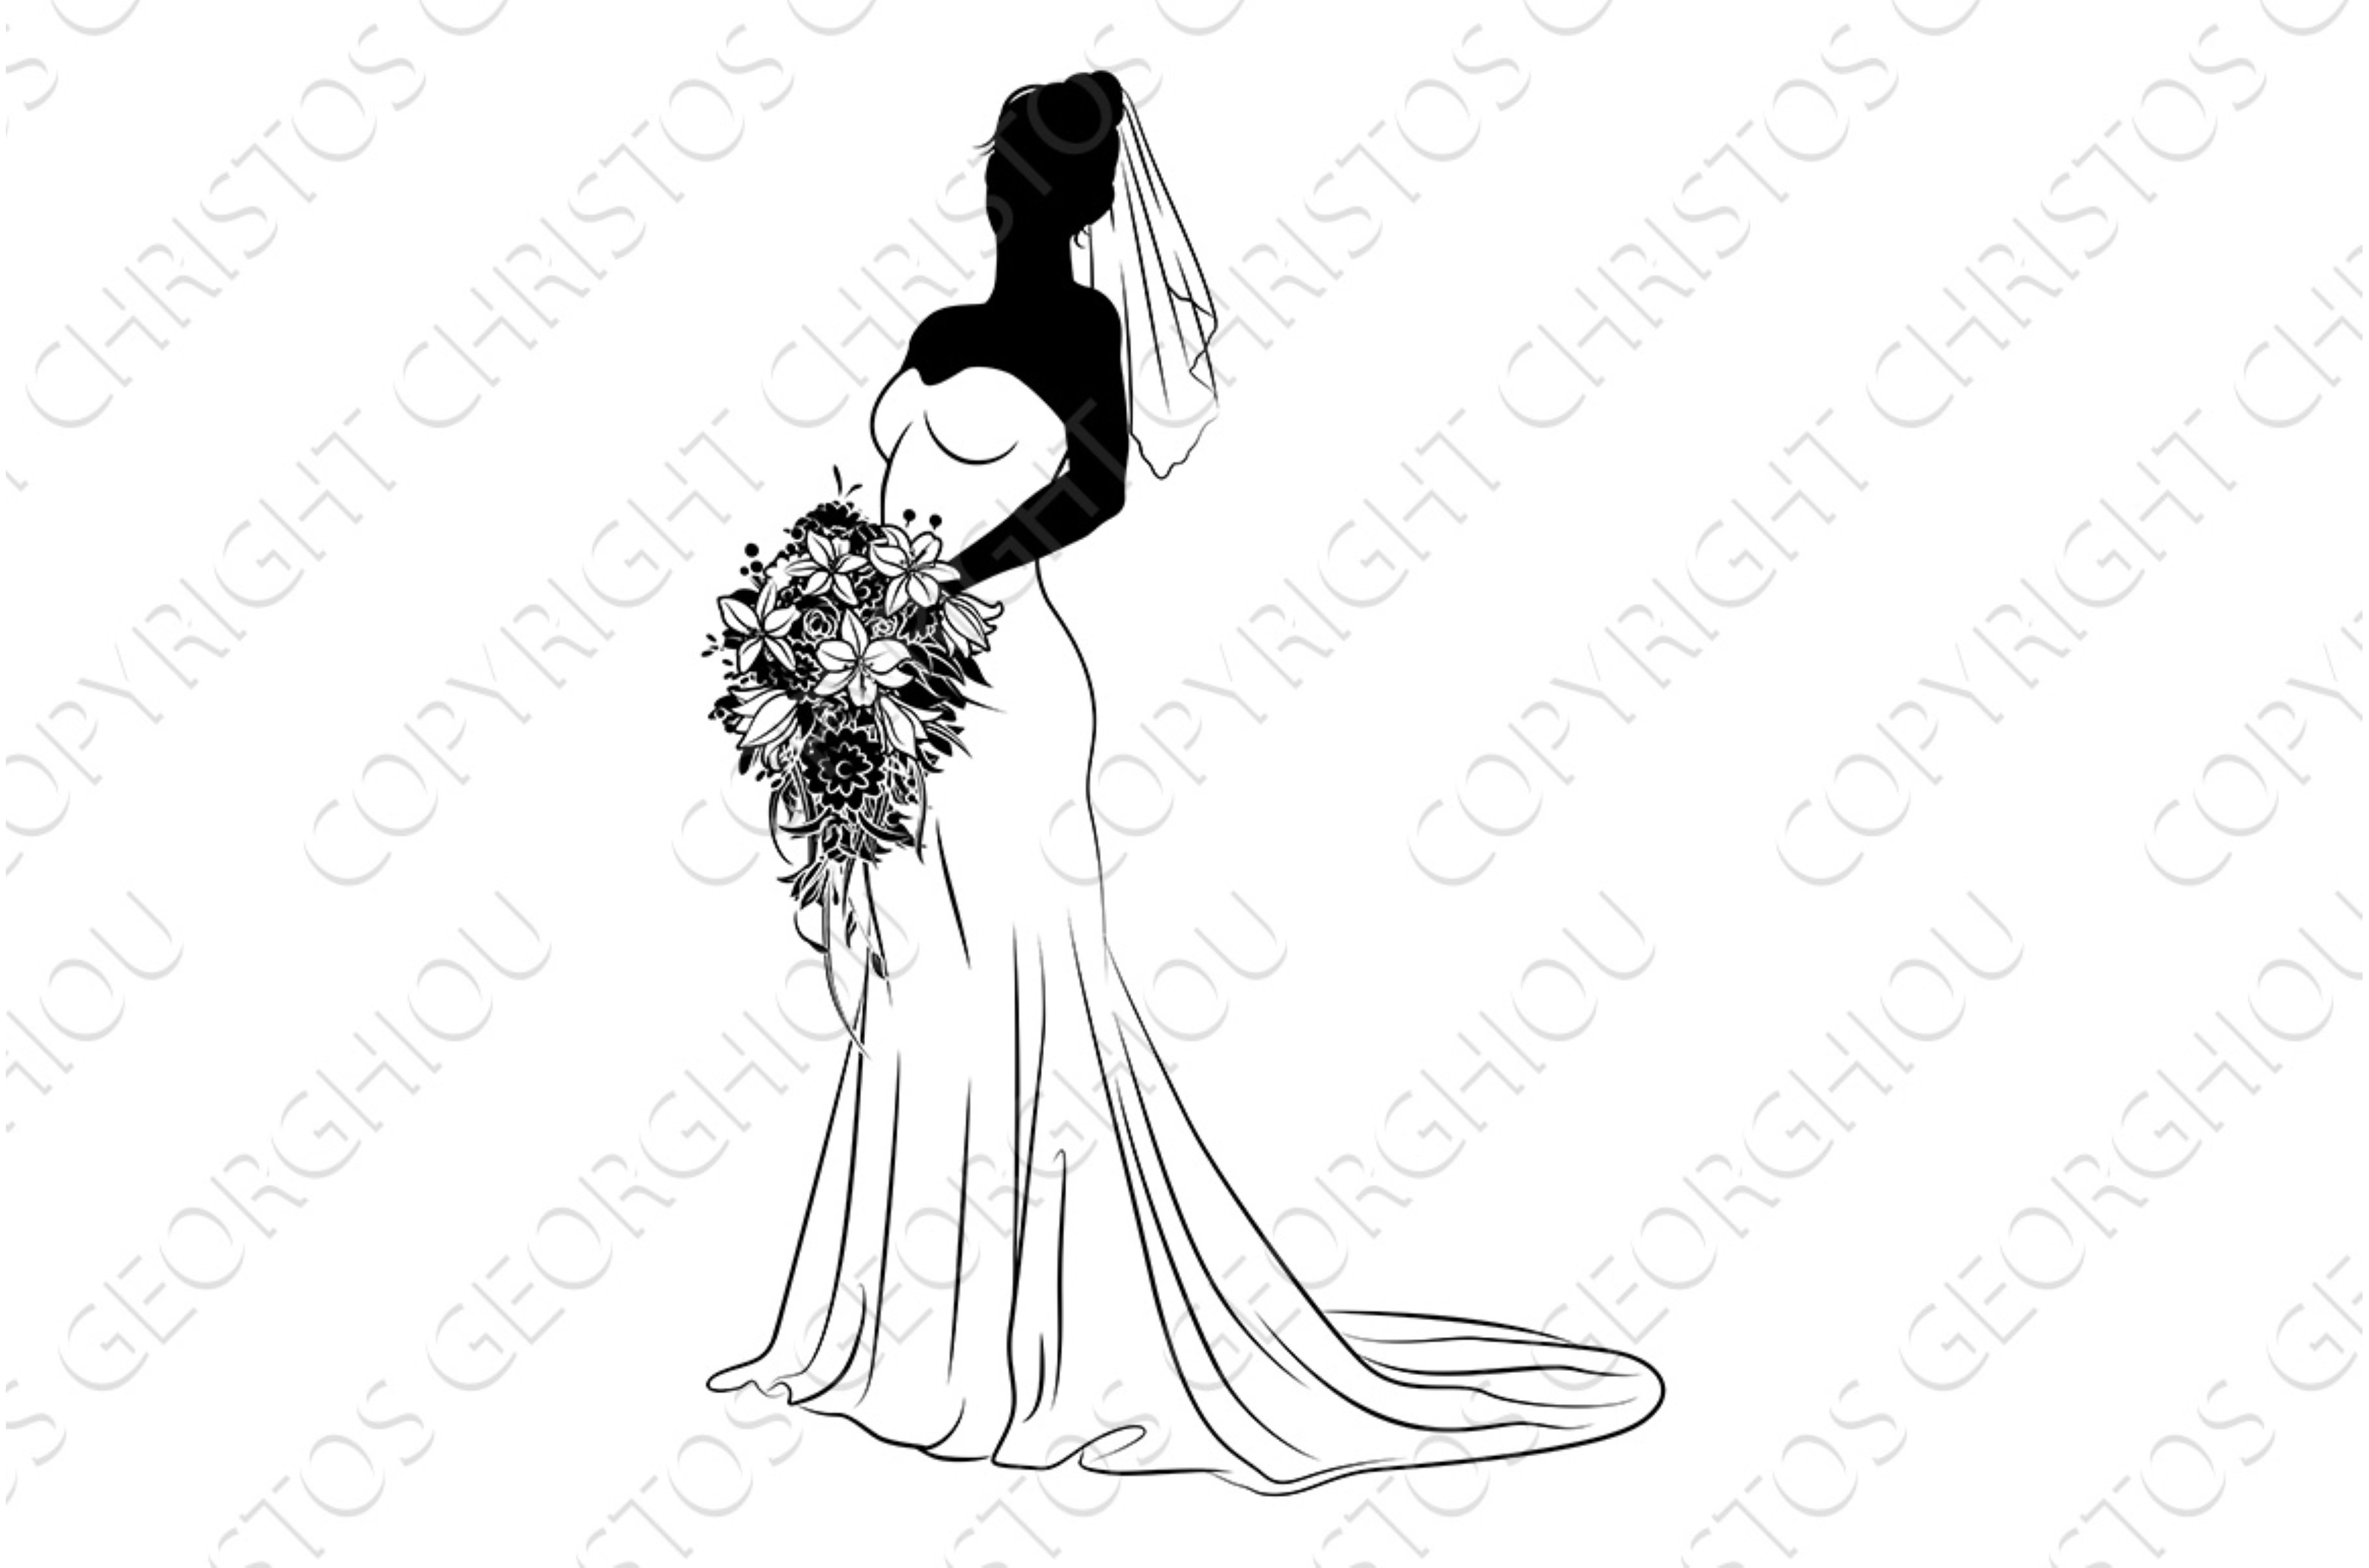 bridesmaid dress silhouette clip art